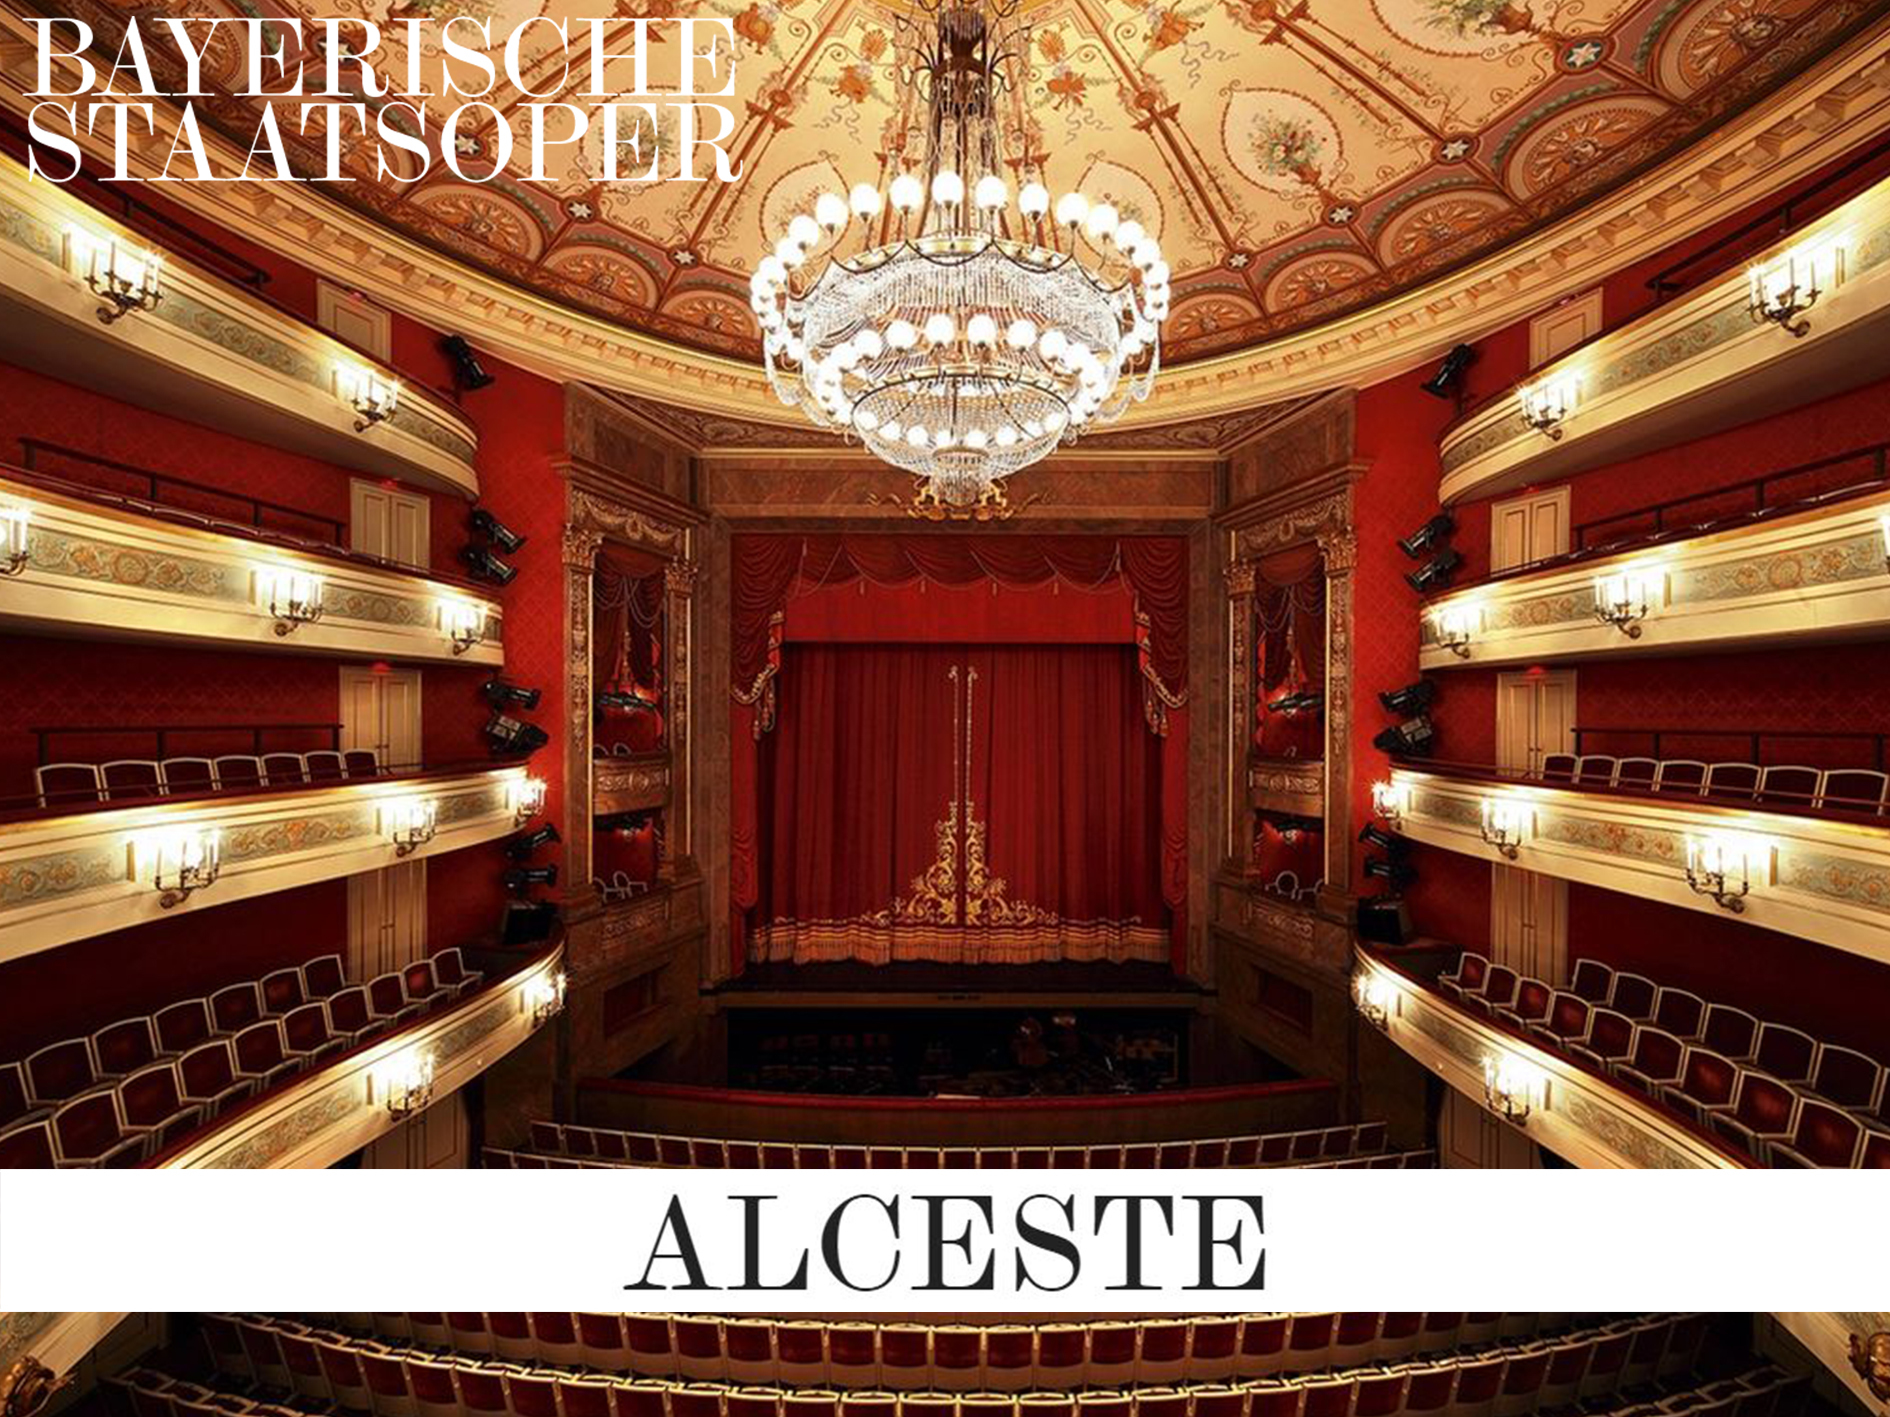 Alceste - Bayerische Staatsoper (2019) (Production - Münich, germany ...